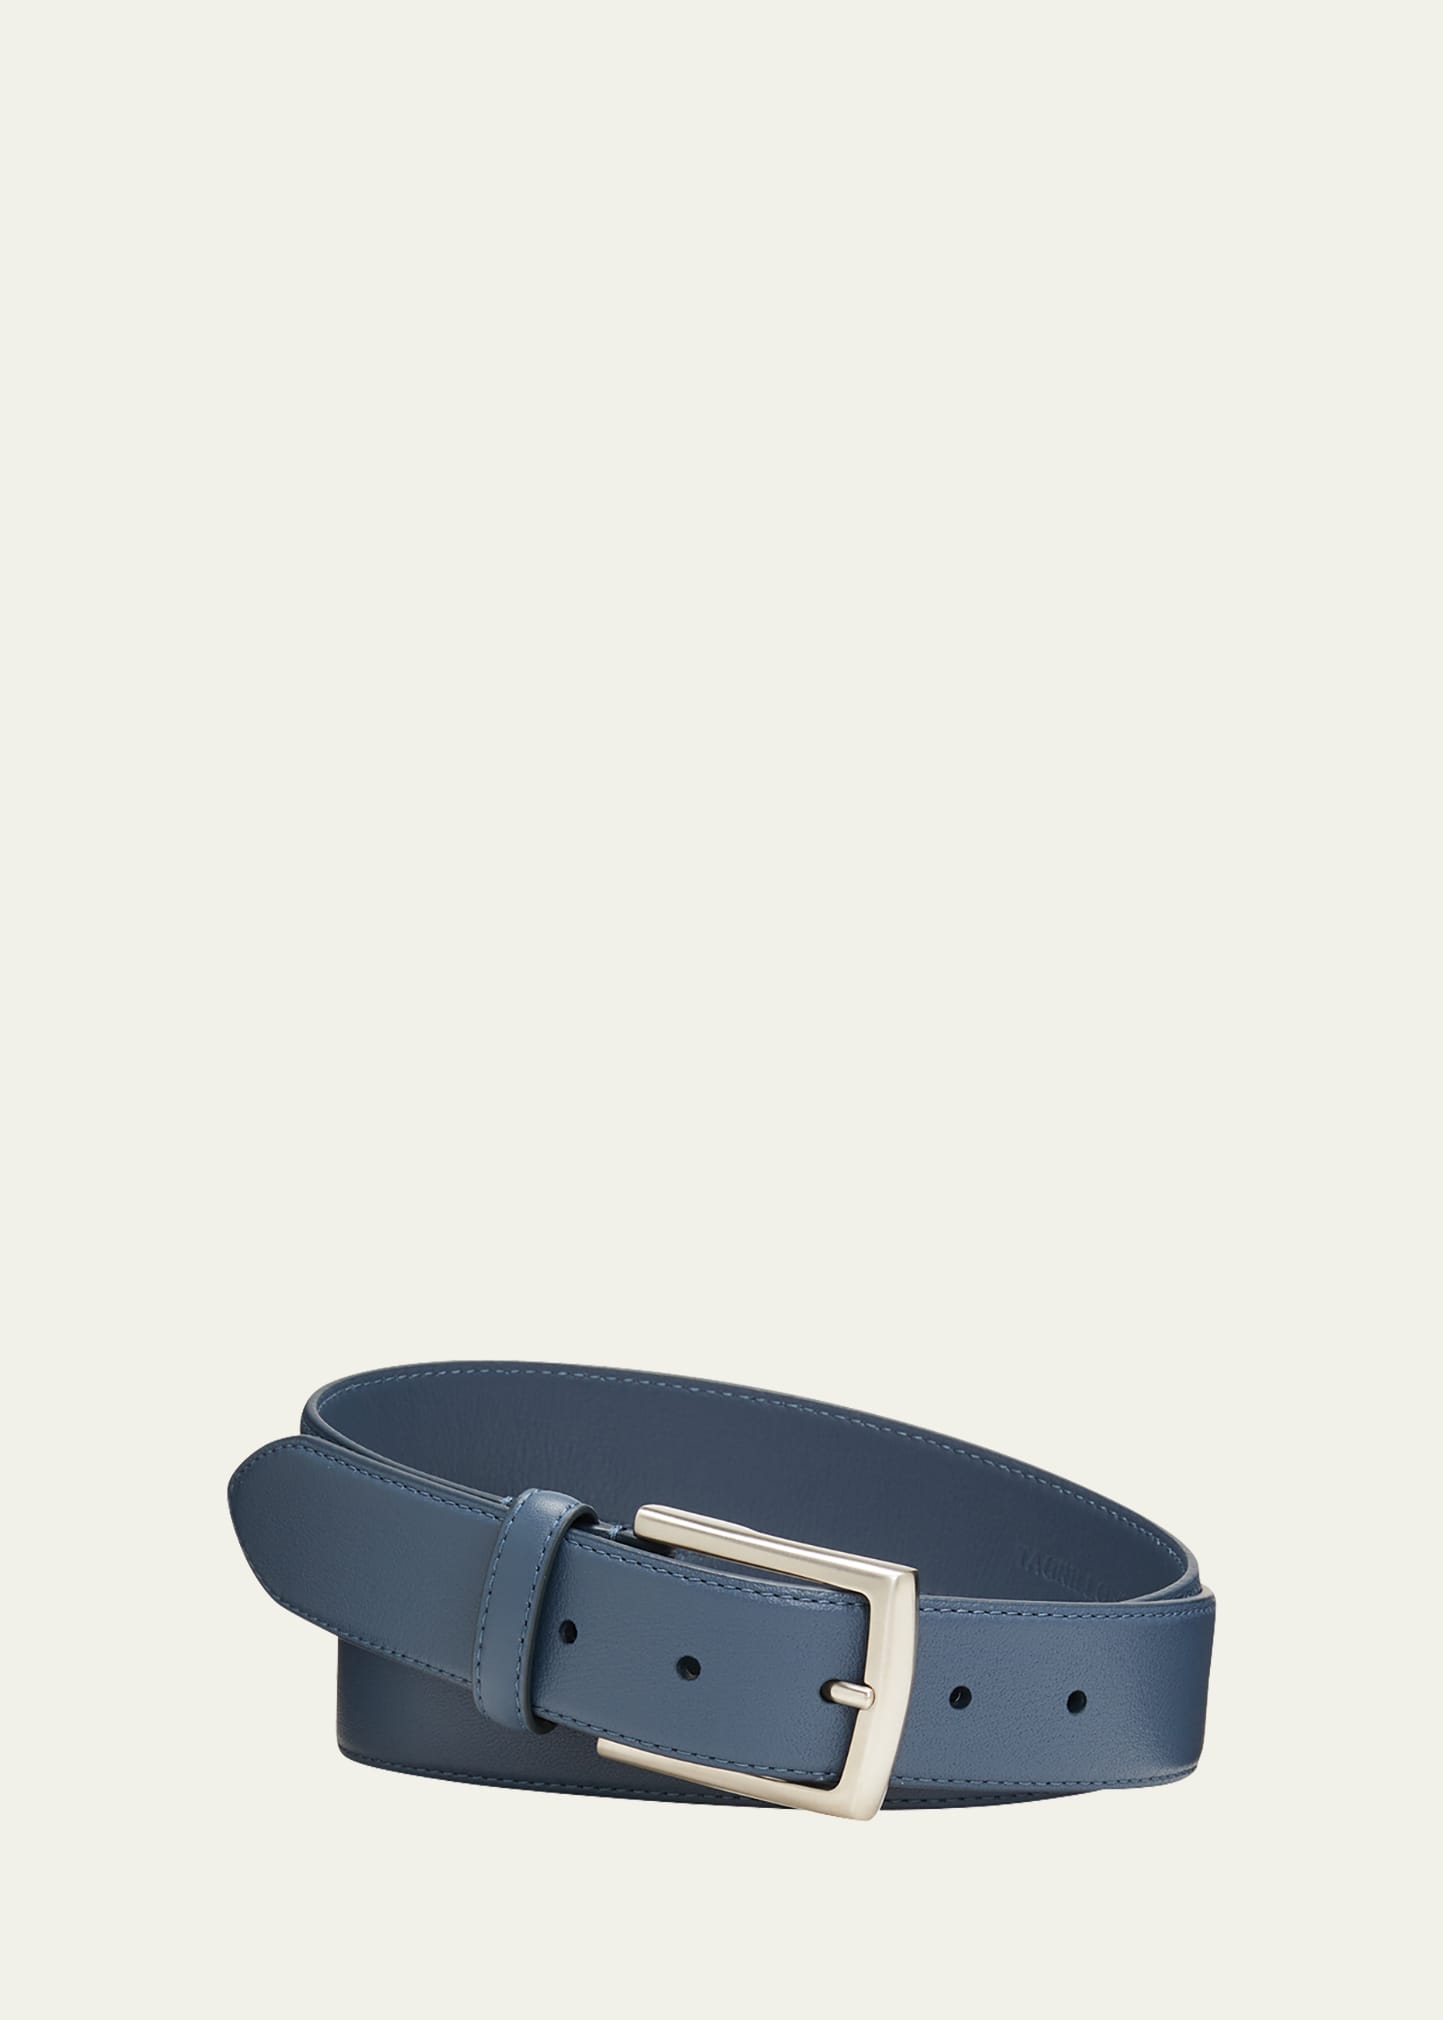 Simonnot Godard Men's Luma Matte Leather Belt In Regate Blue